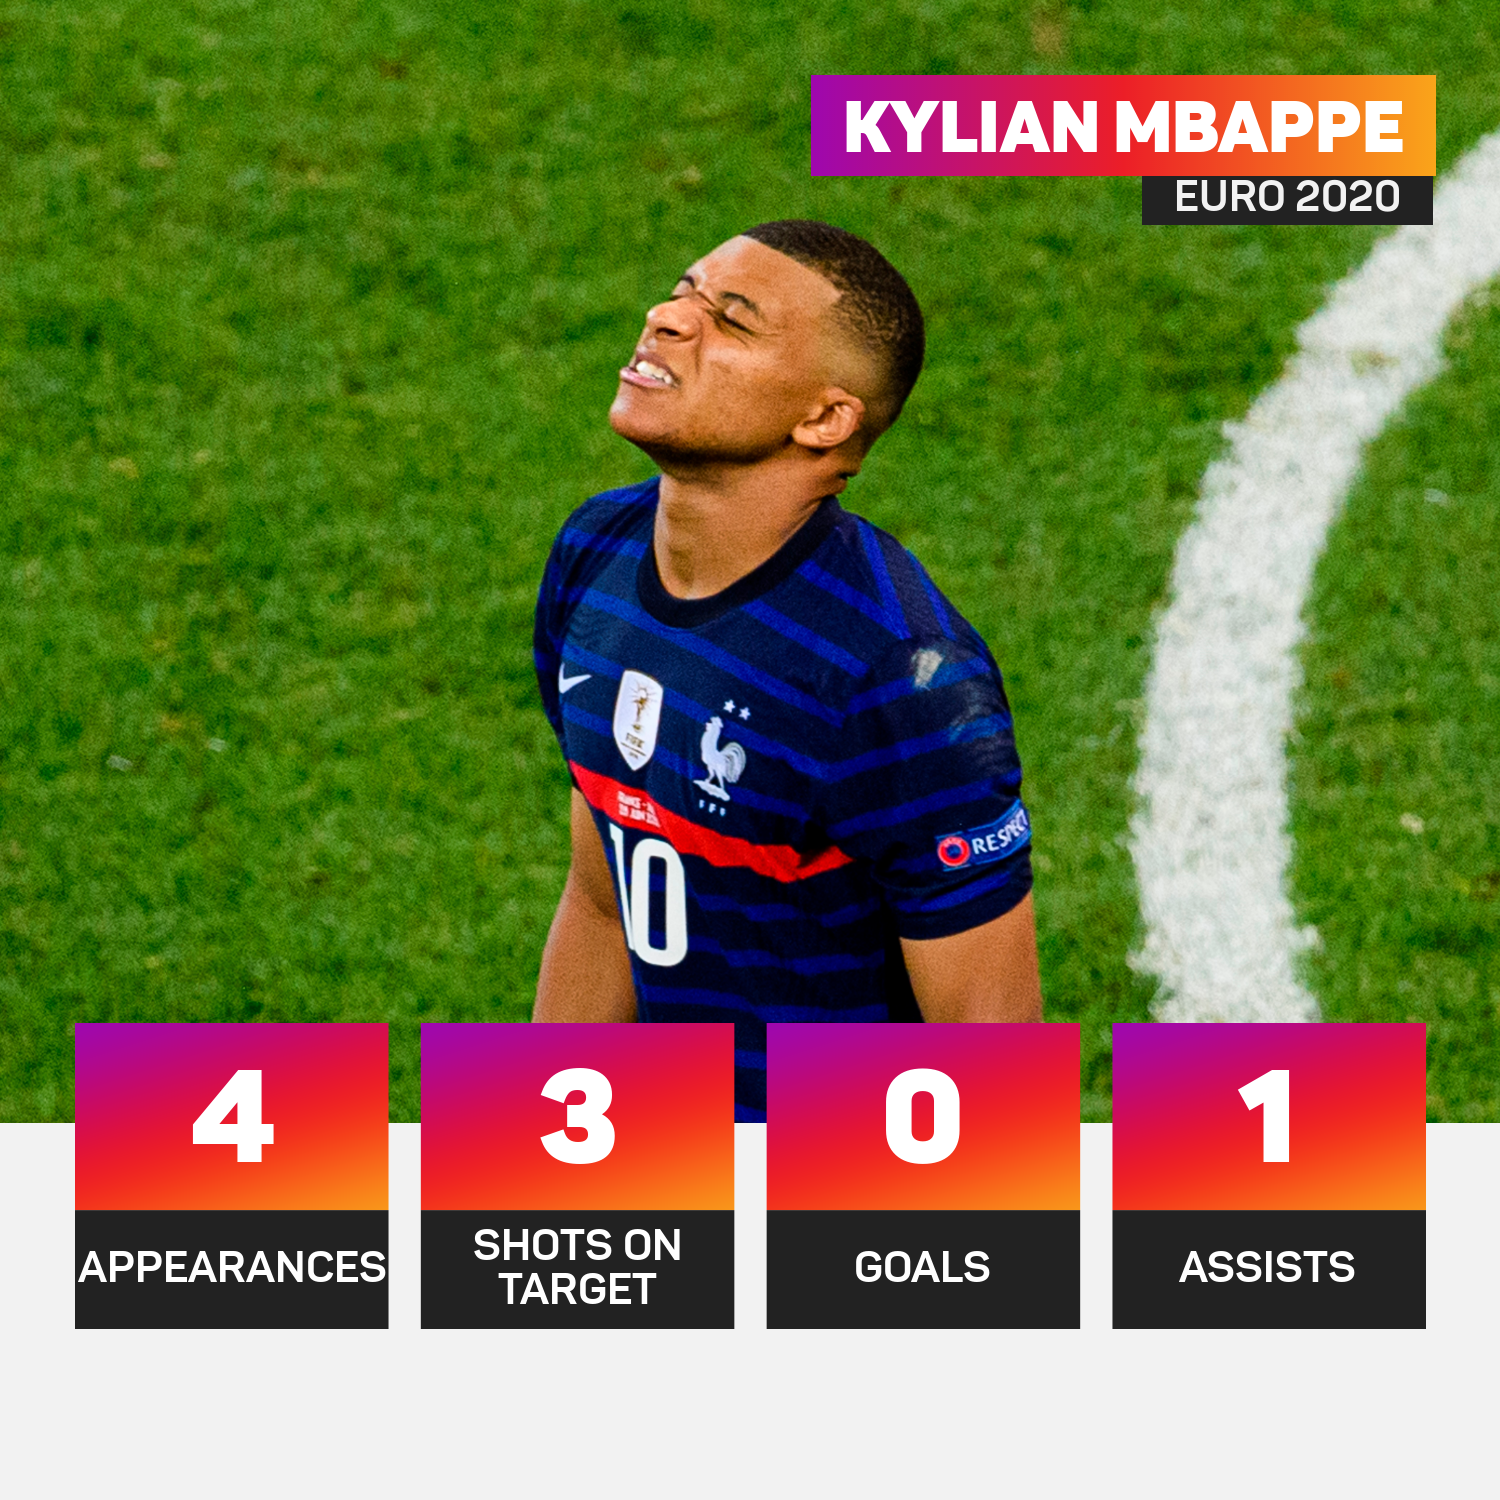 Kylian Mbappe Euro 2020 data